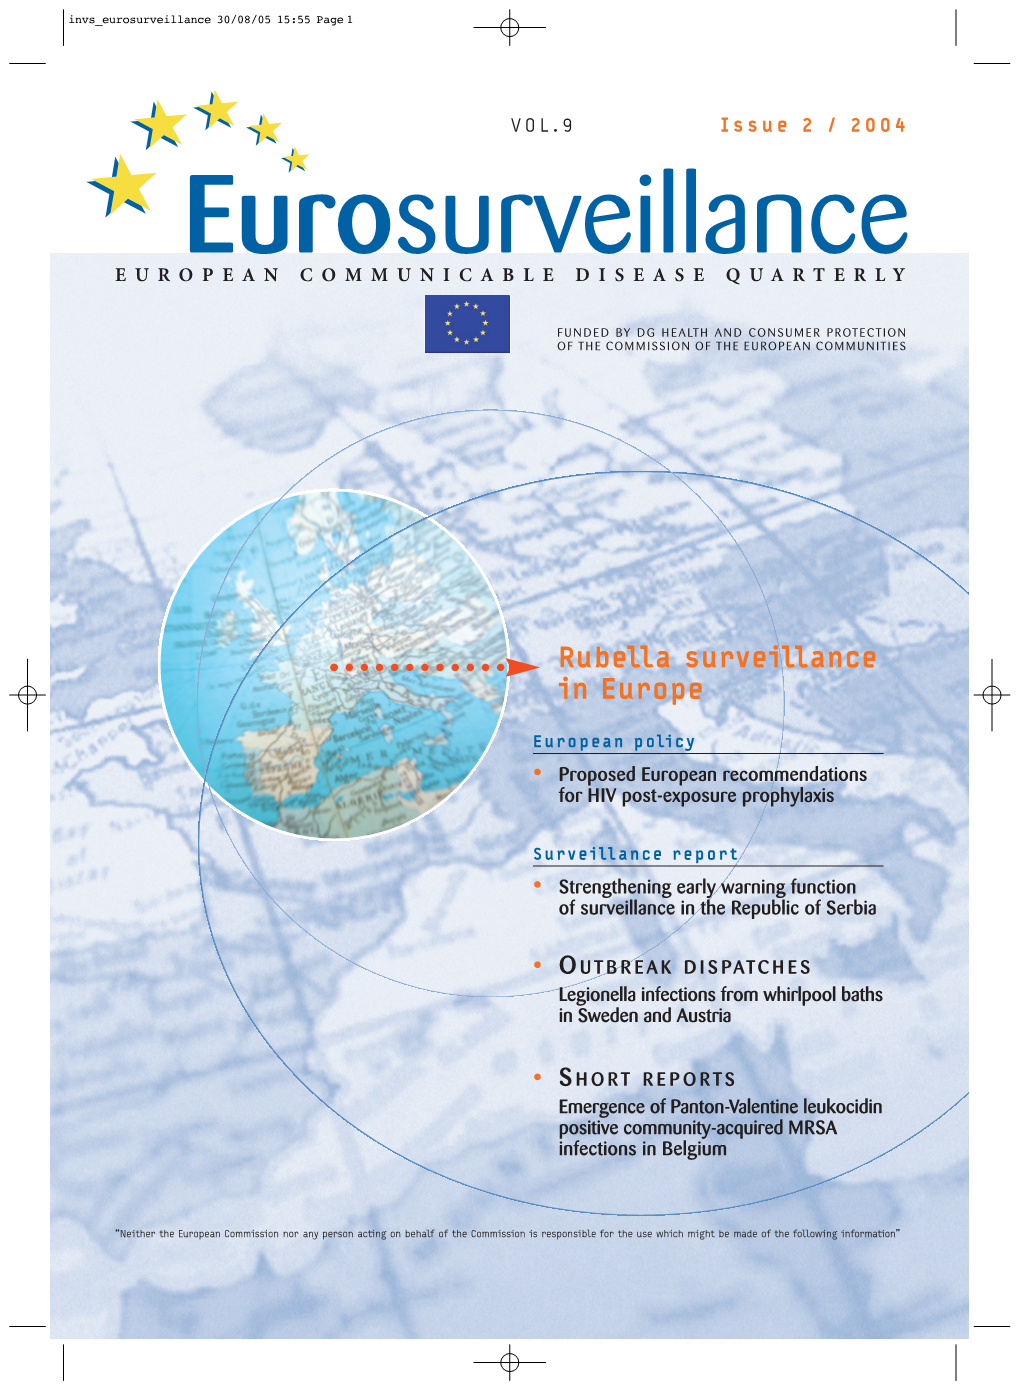 Rubella Surveillance in Europe